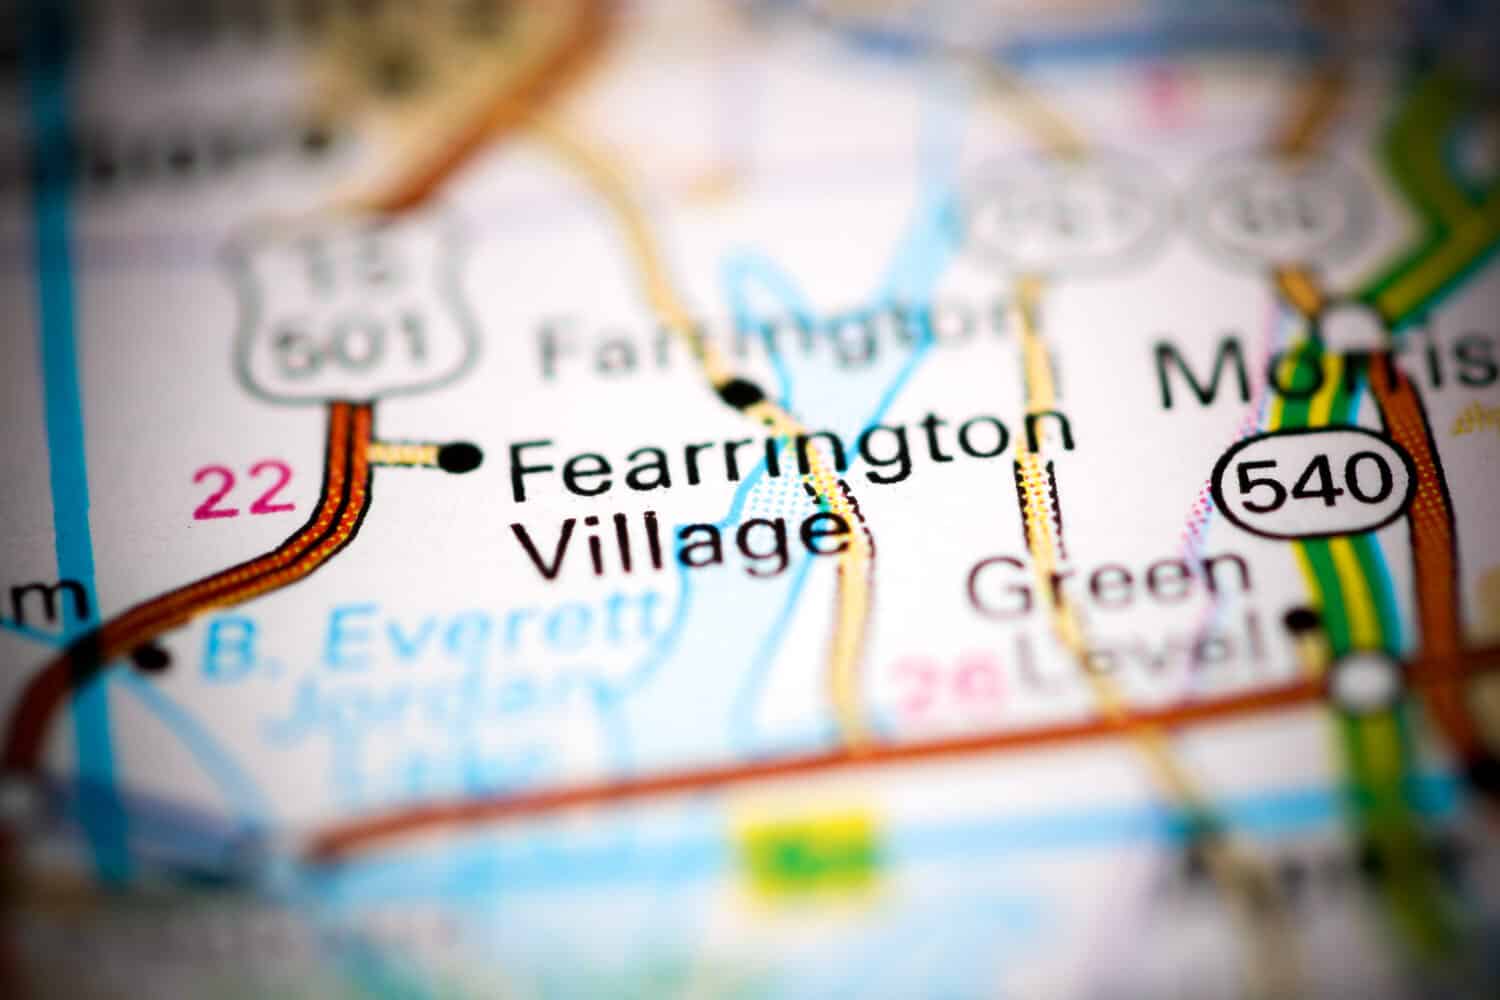 Fearrington Village. North Carolina. USA on a geography map